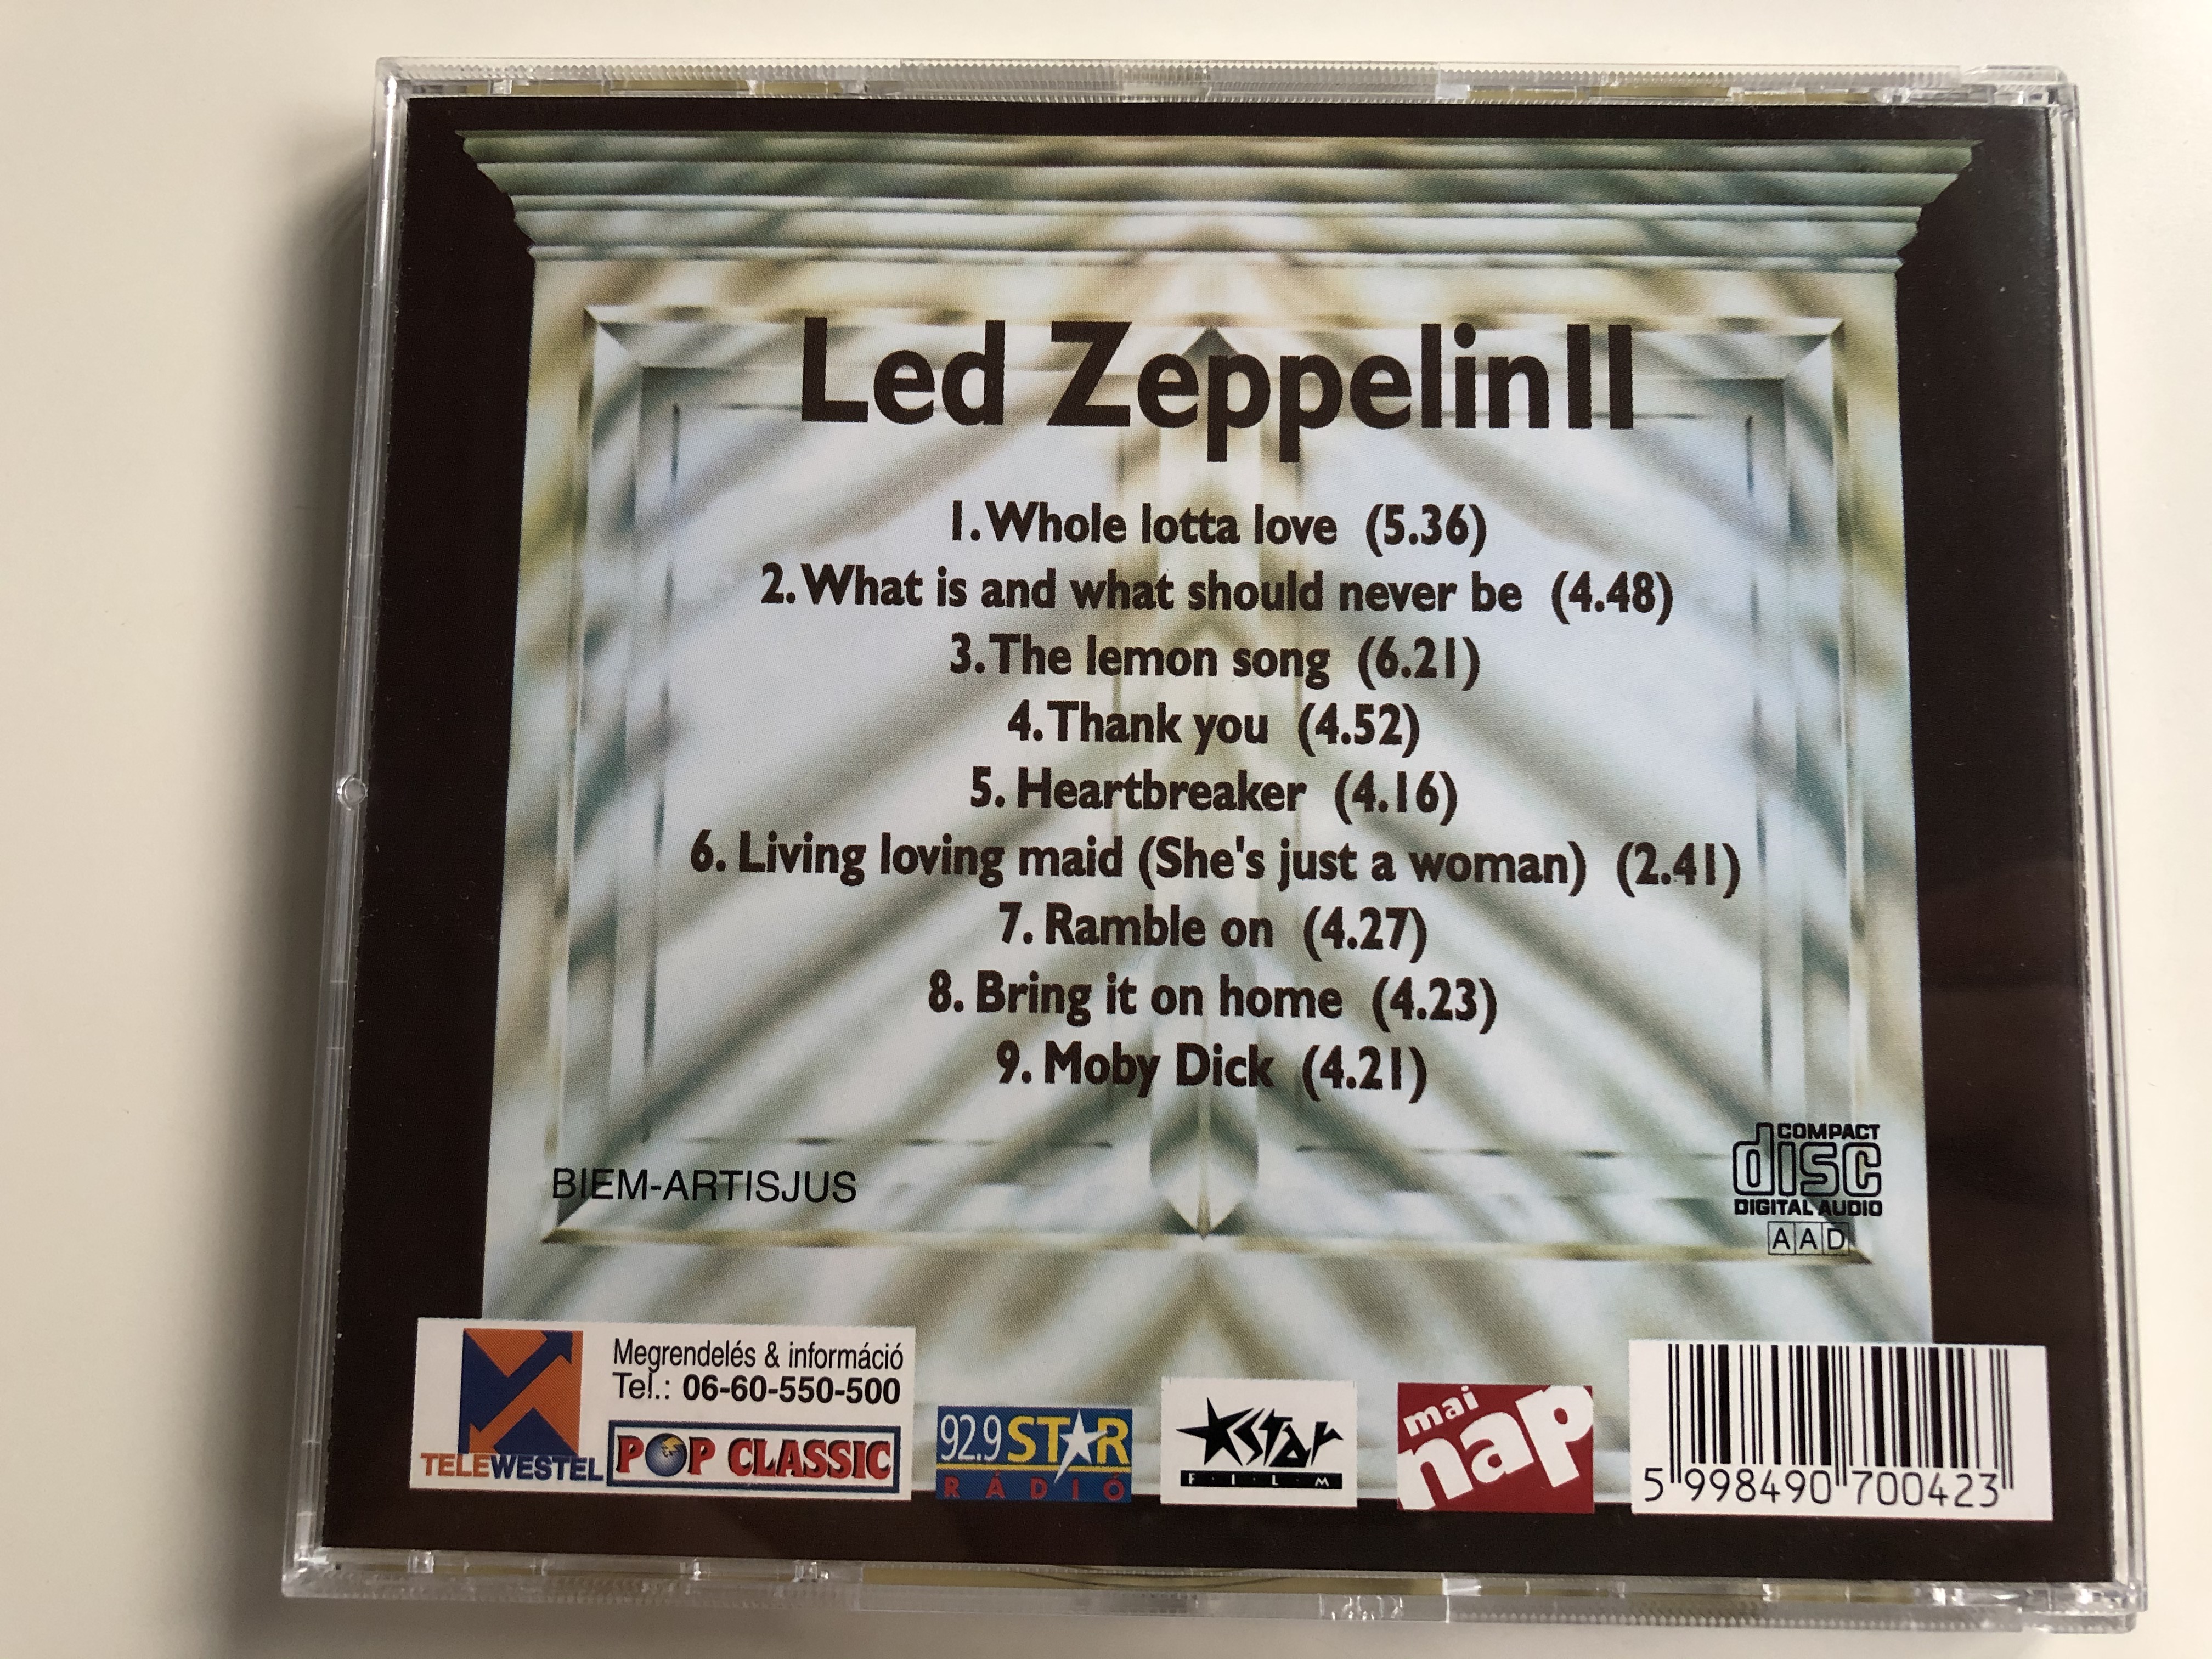 led-zeppelin-ii-pop-classic-euroton-audio-cd-eucd-0042-4-.jpg